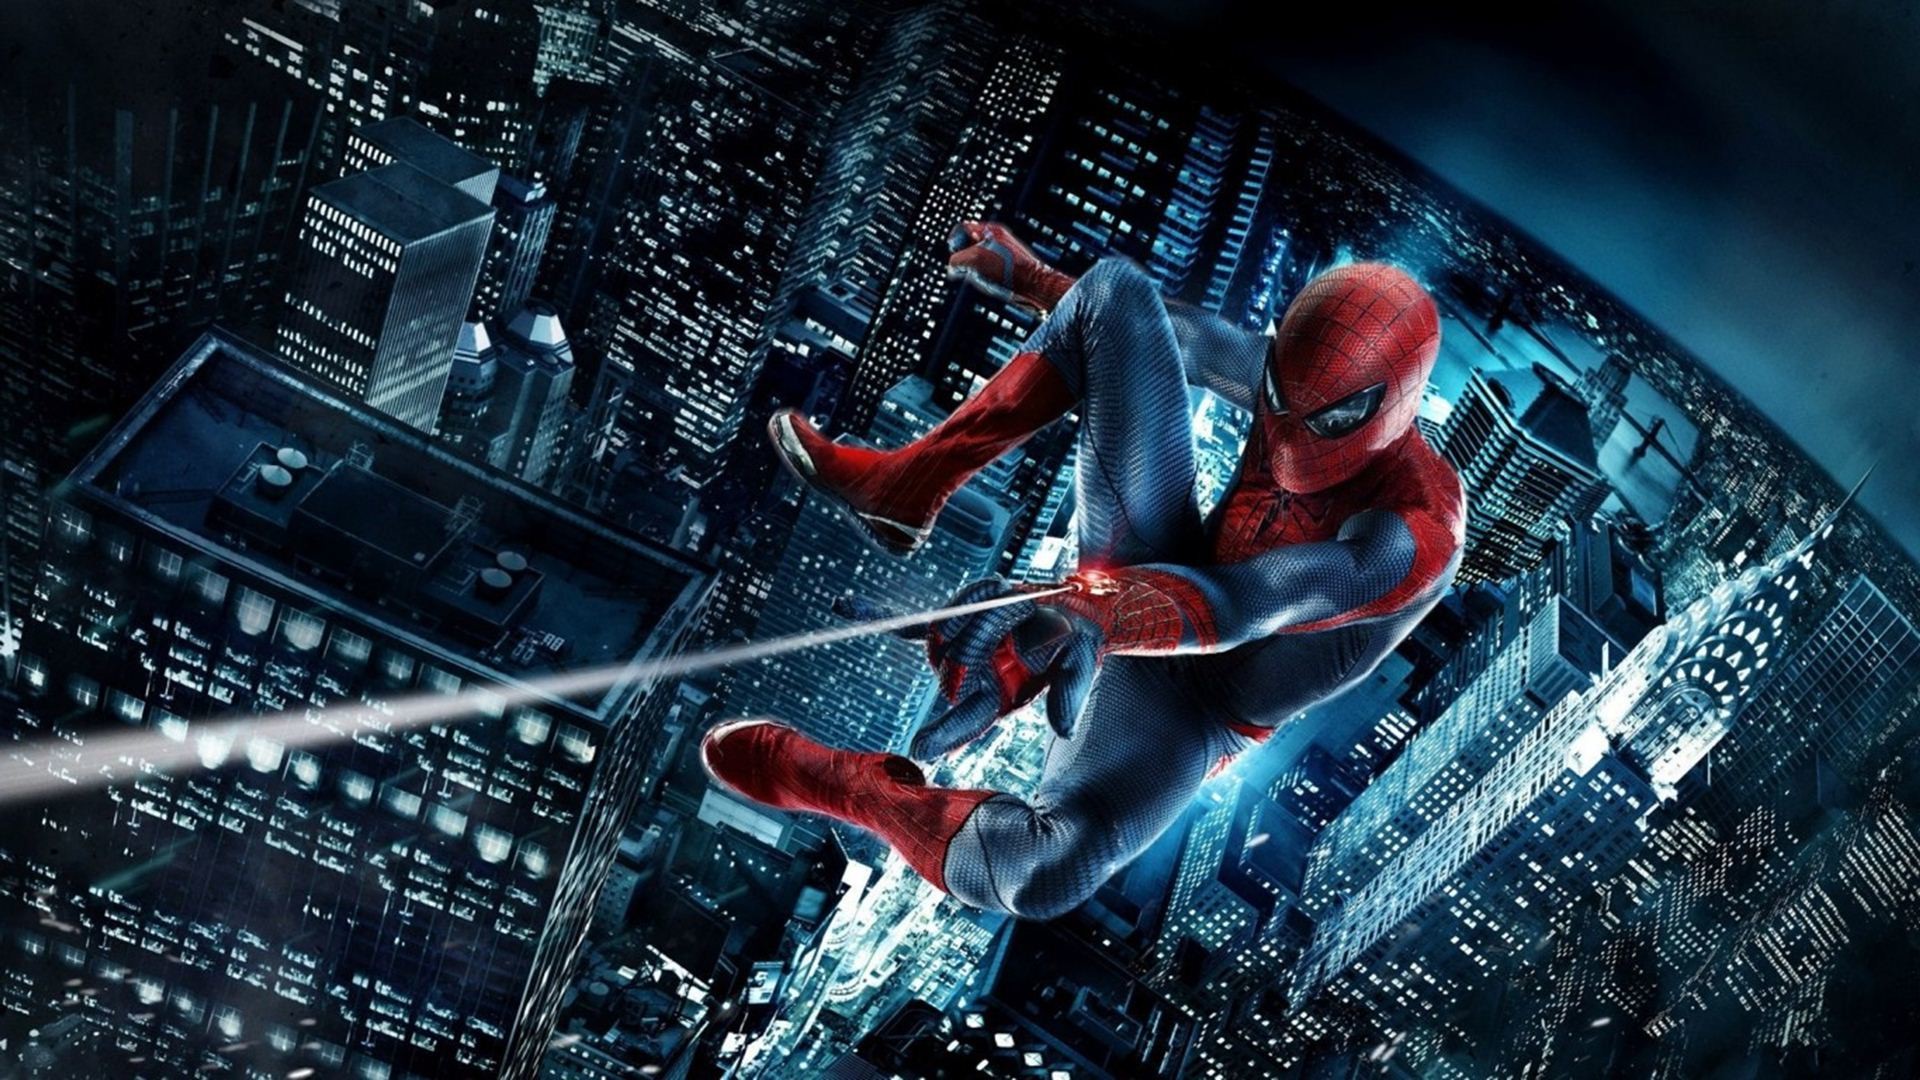 1920x1080 Movie-The-Amazing-Spider-Man-jpg-1920%C3%